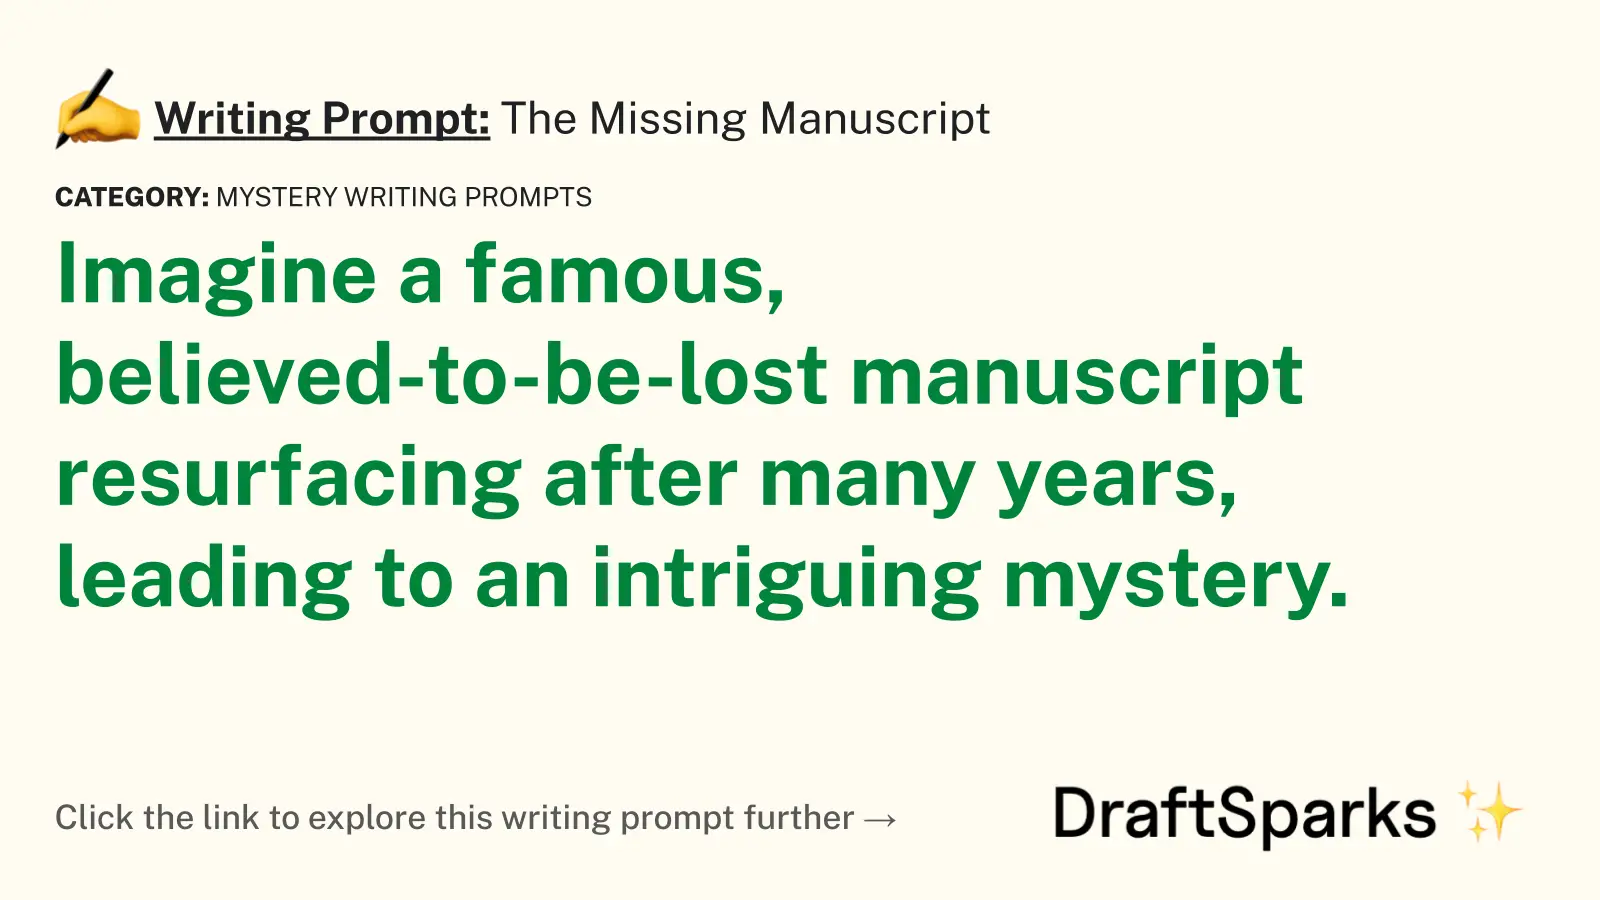 The Missing Manuscript